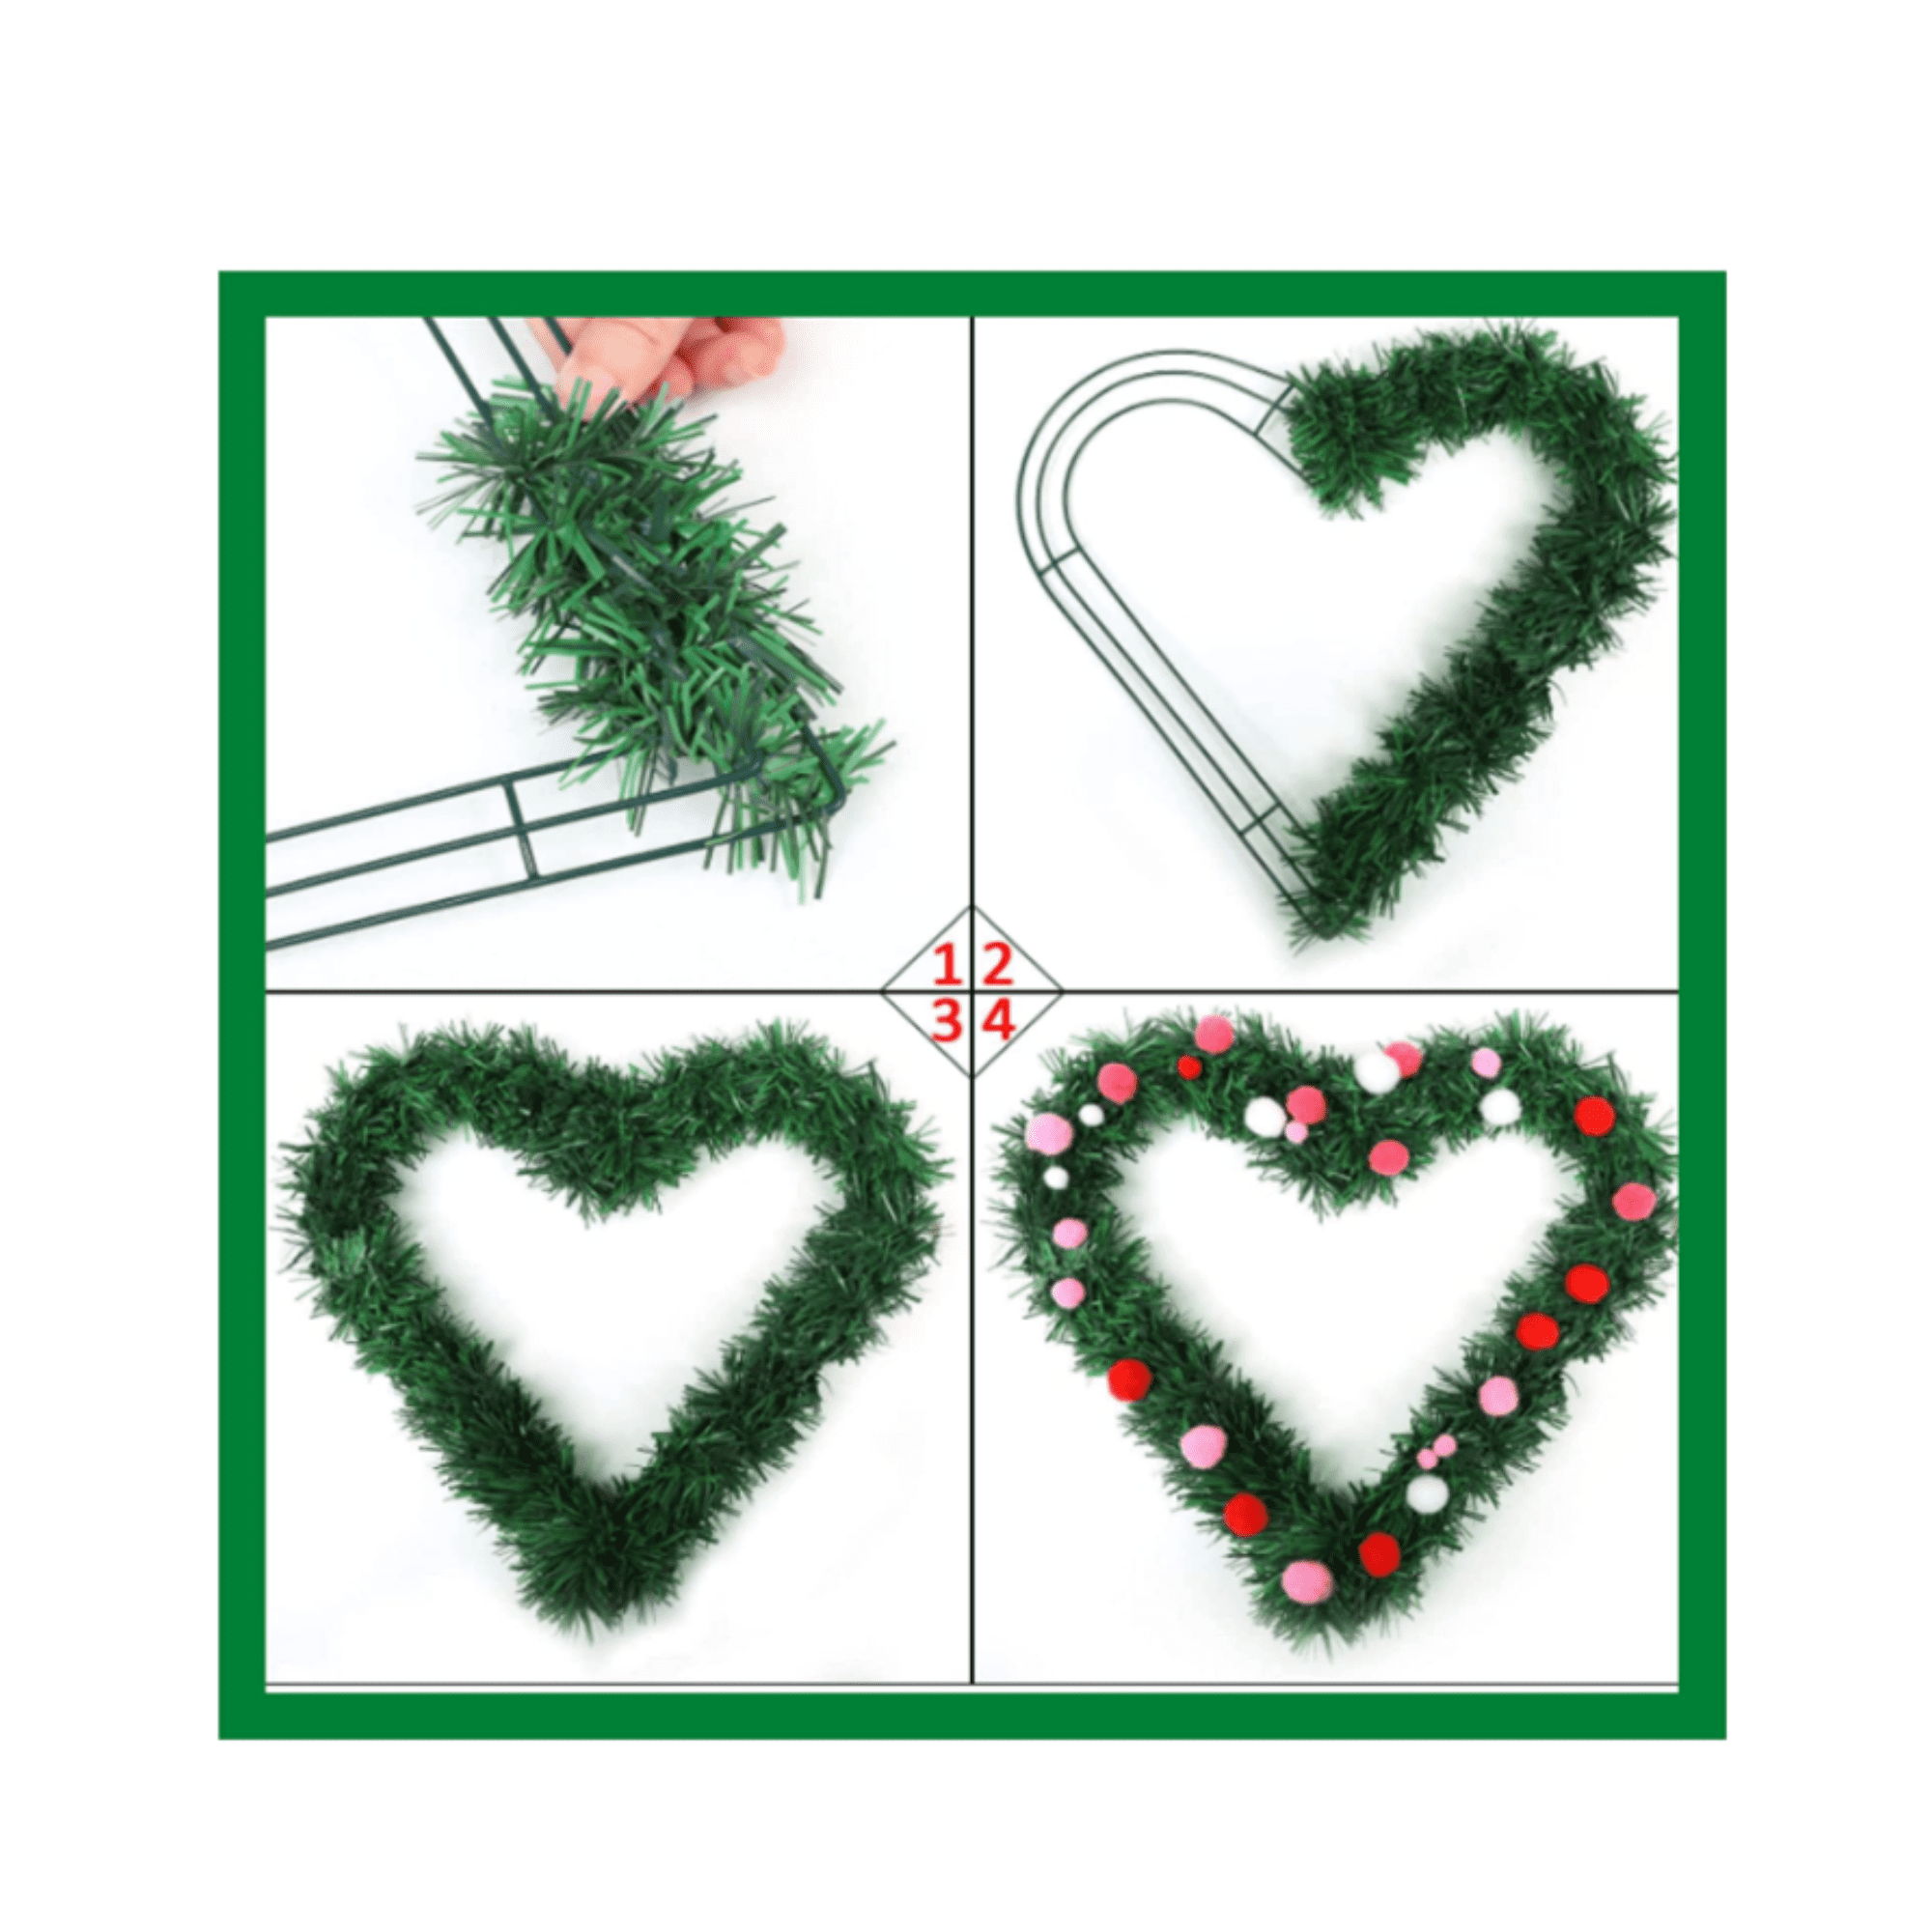 Heart Shaped Wreath Frame stock photo. Image of shape - 19919686